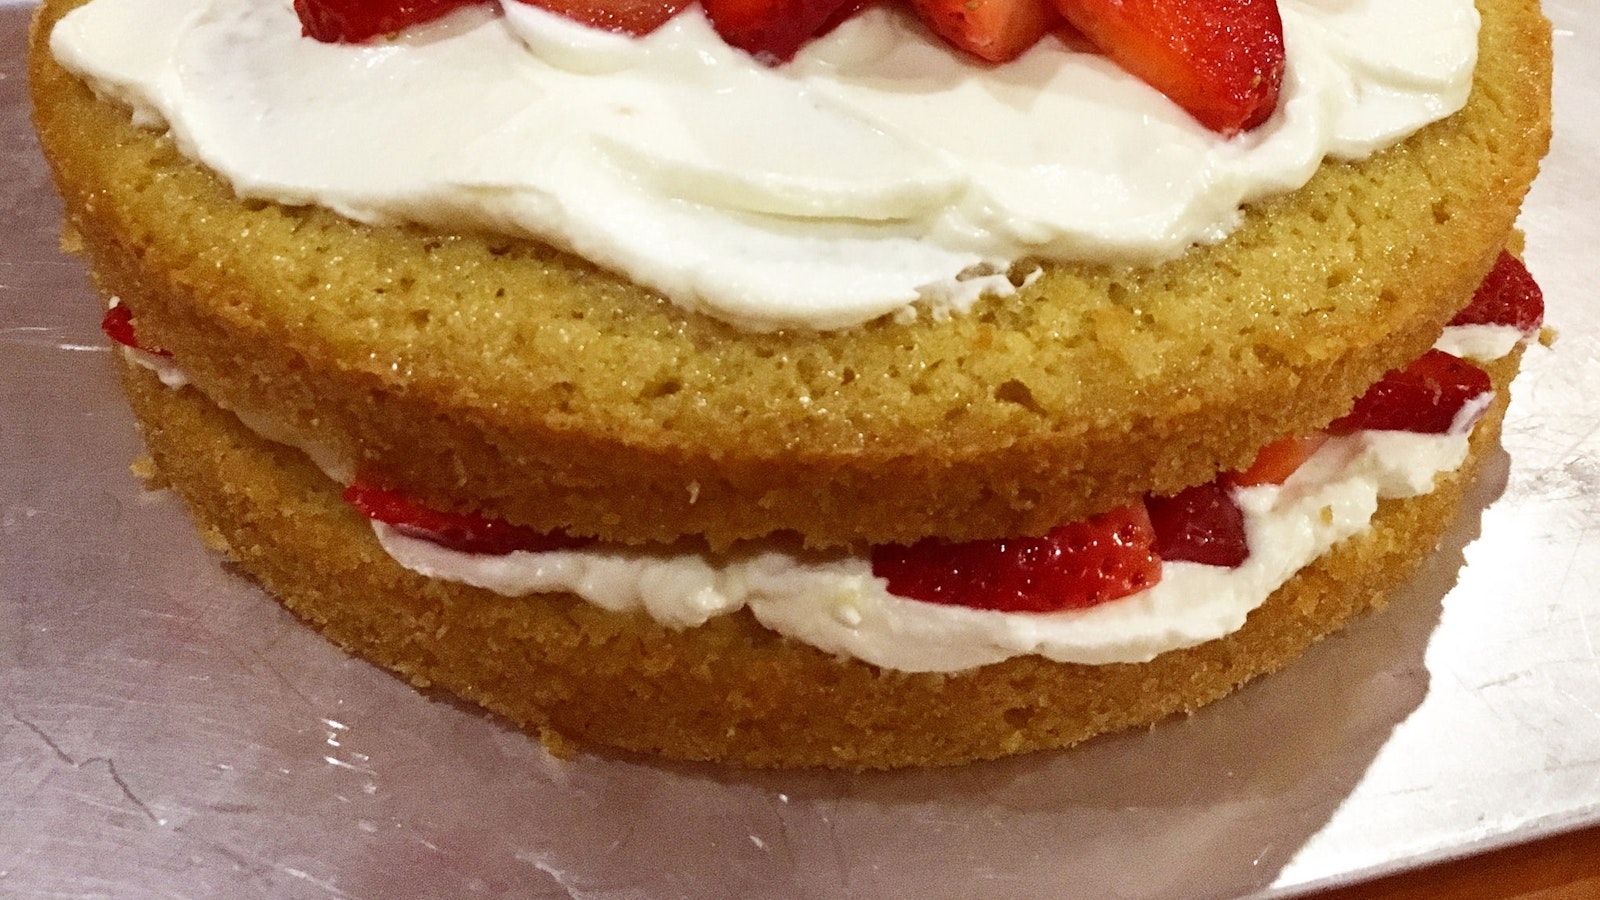 Strawberry Cake with Cream